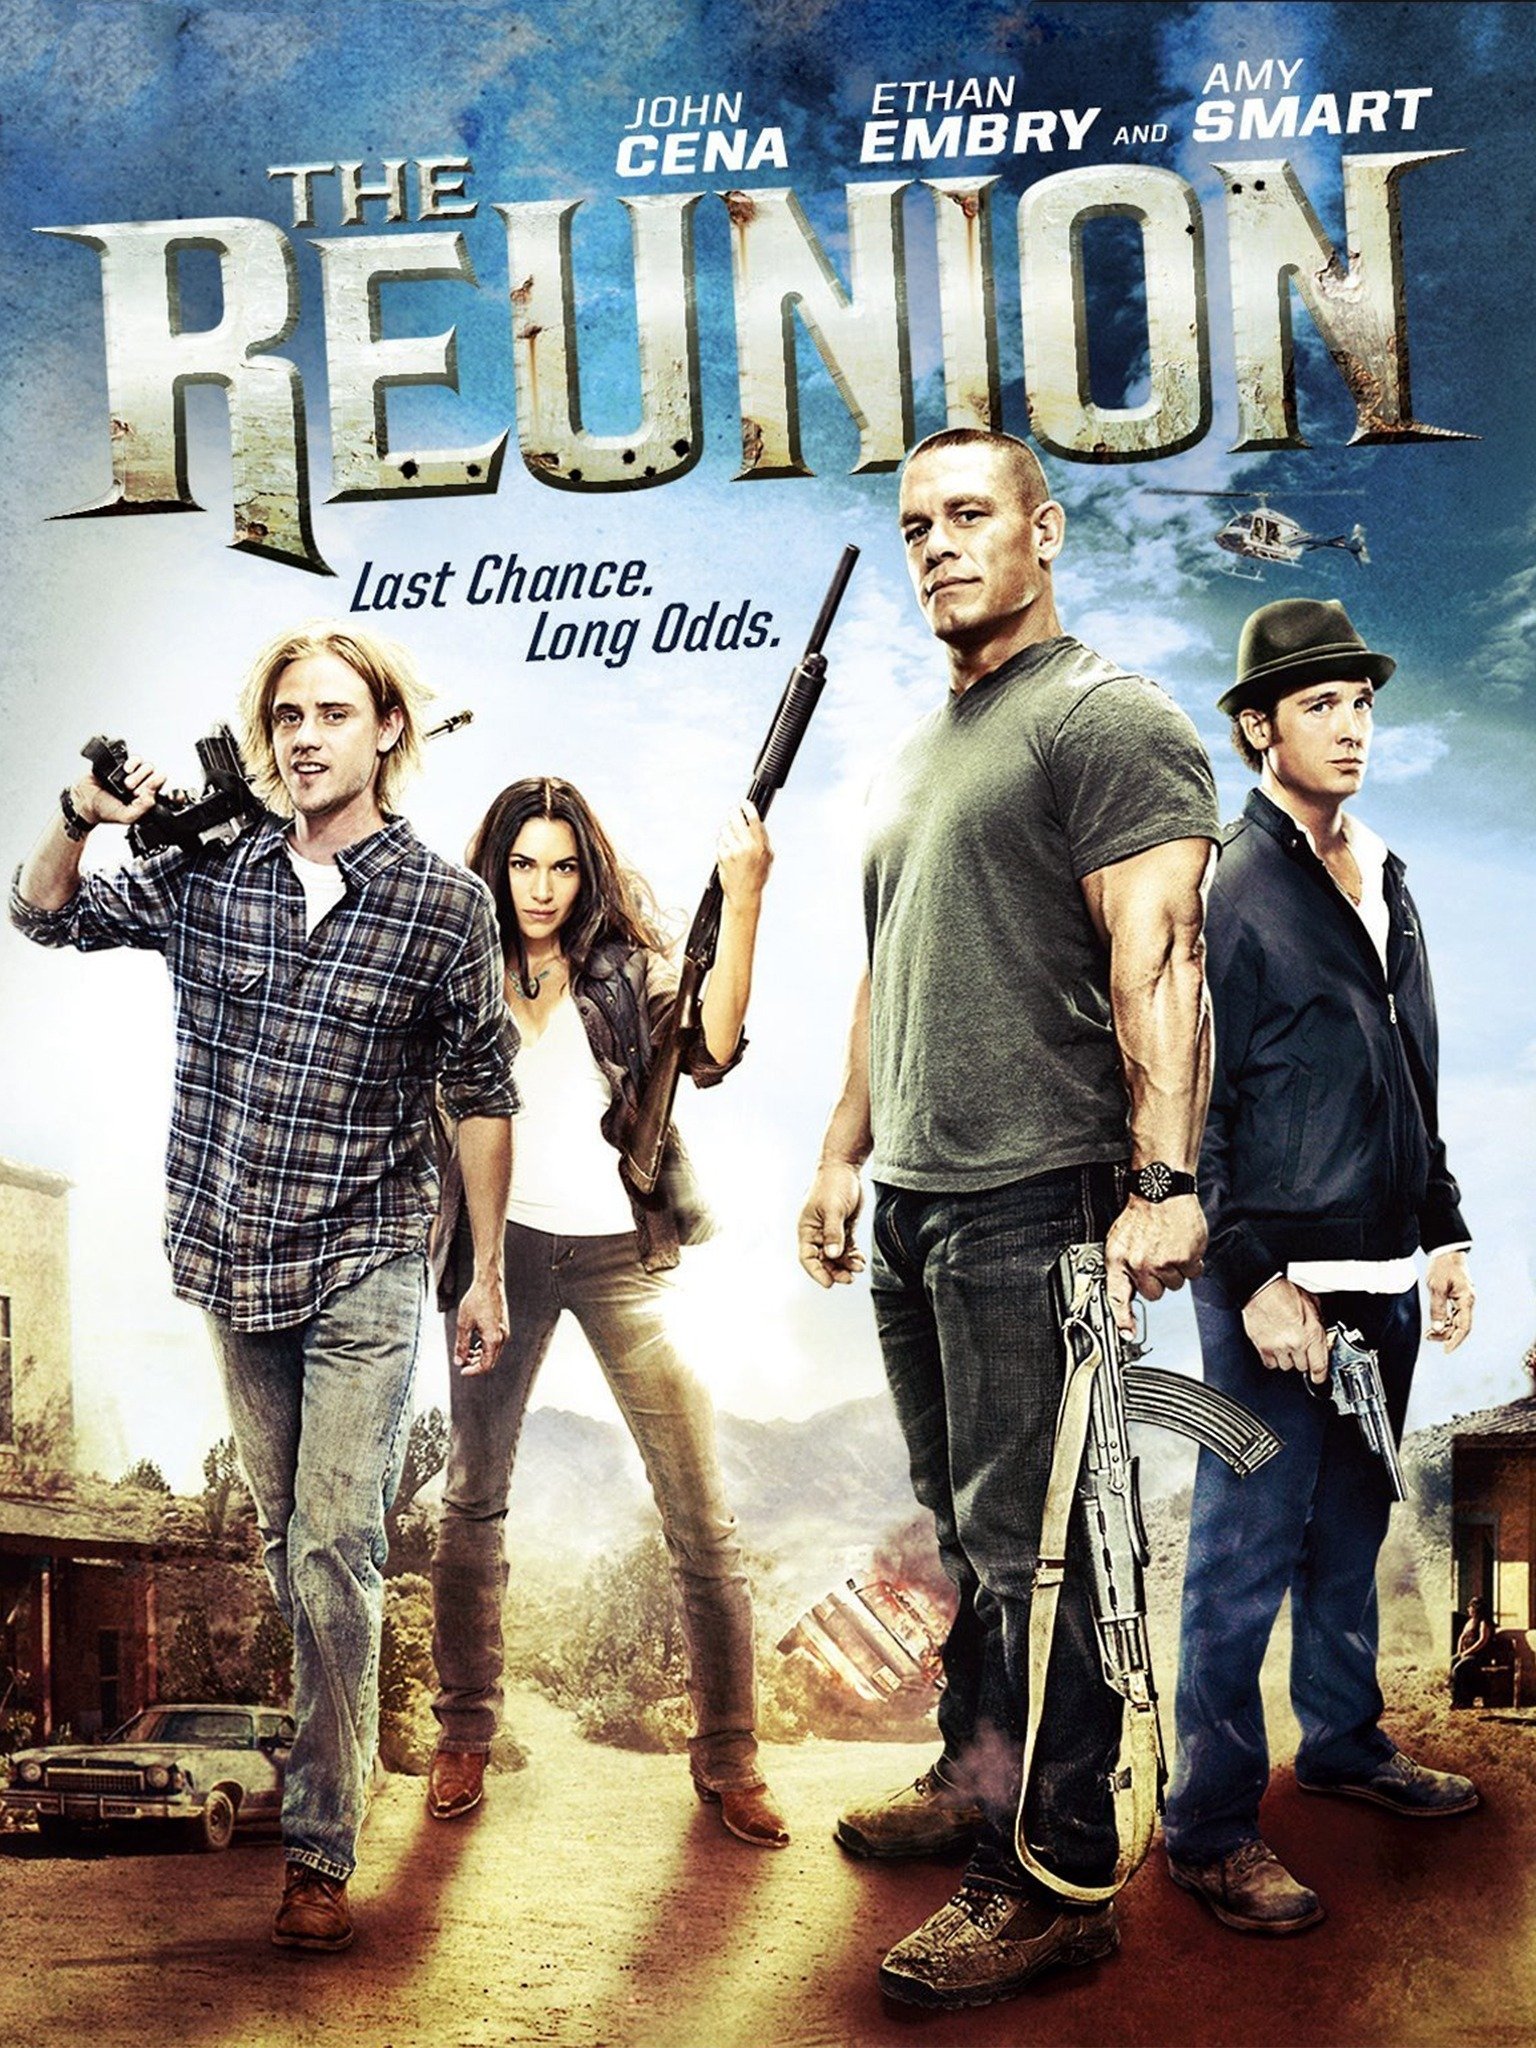 The Reunion by Dan Walsh